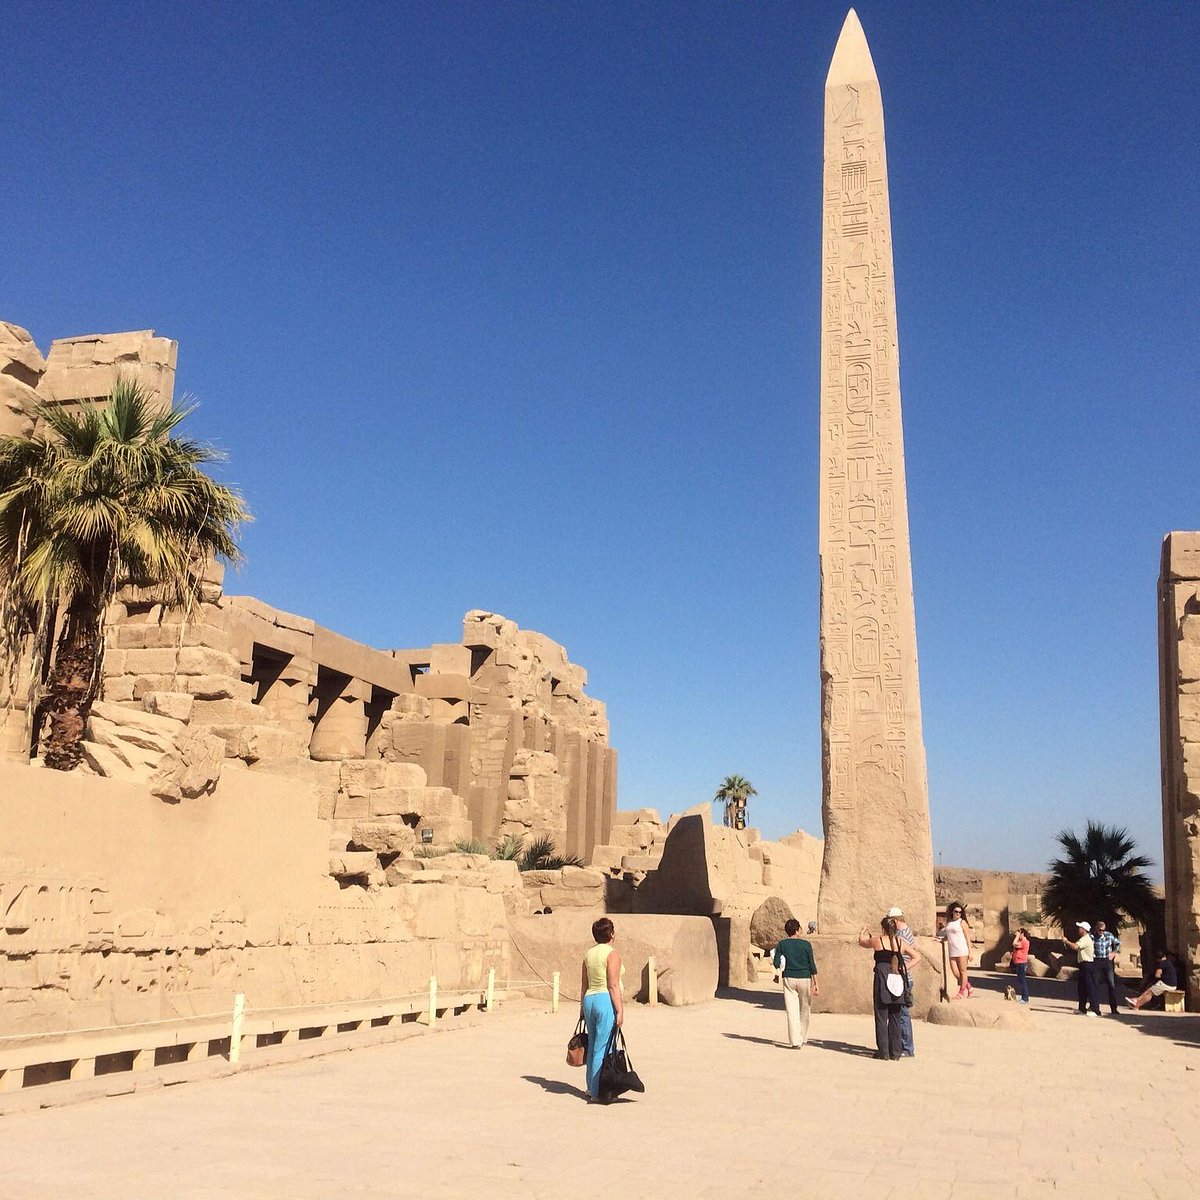 Obelisk of Thutmoses I, Луксор: лучшие советы перед посещением - Tripadvisor